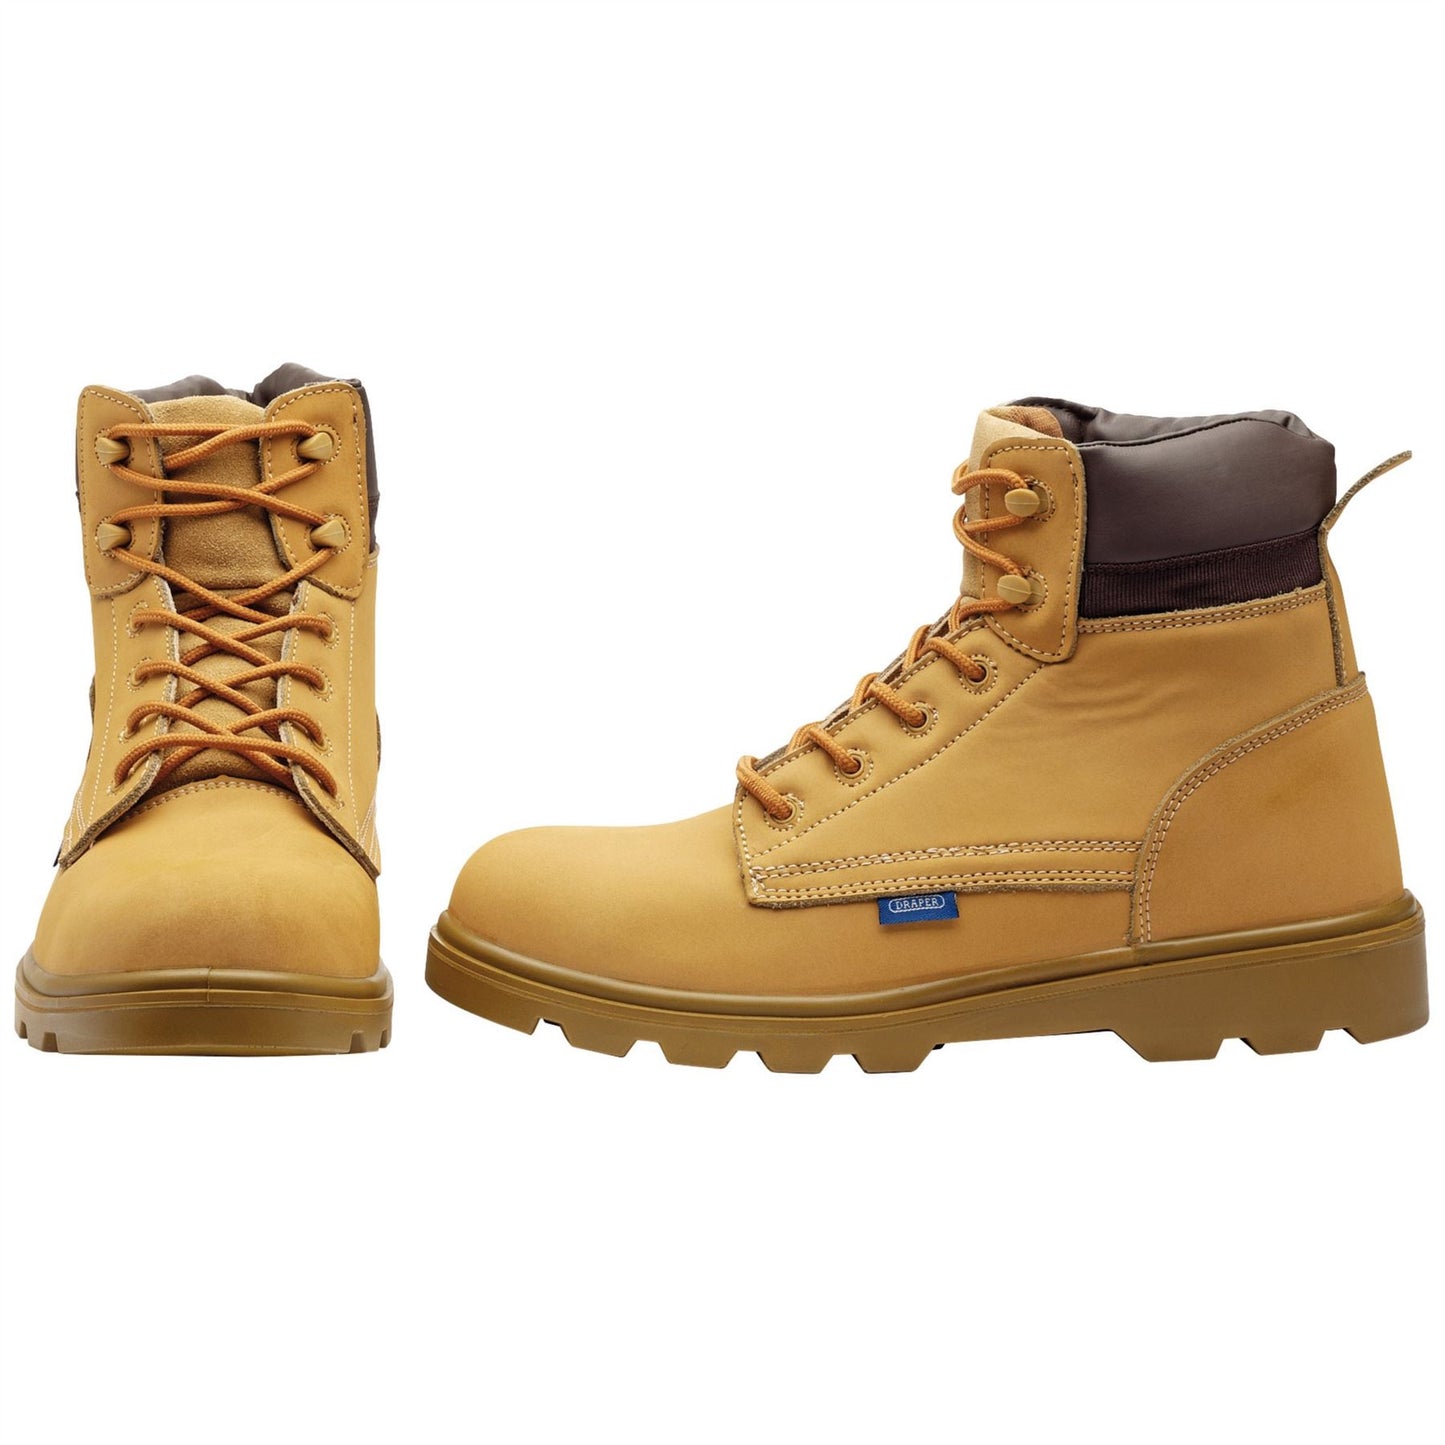 Draper Nubuck Style Safety Boots Size 11 S1 P SRC - 85970